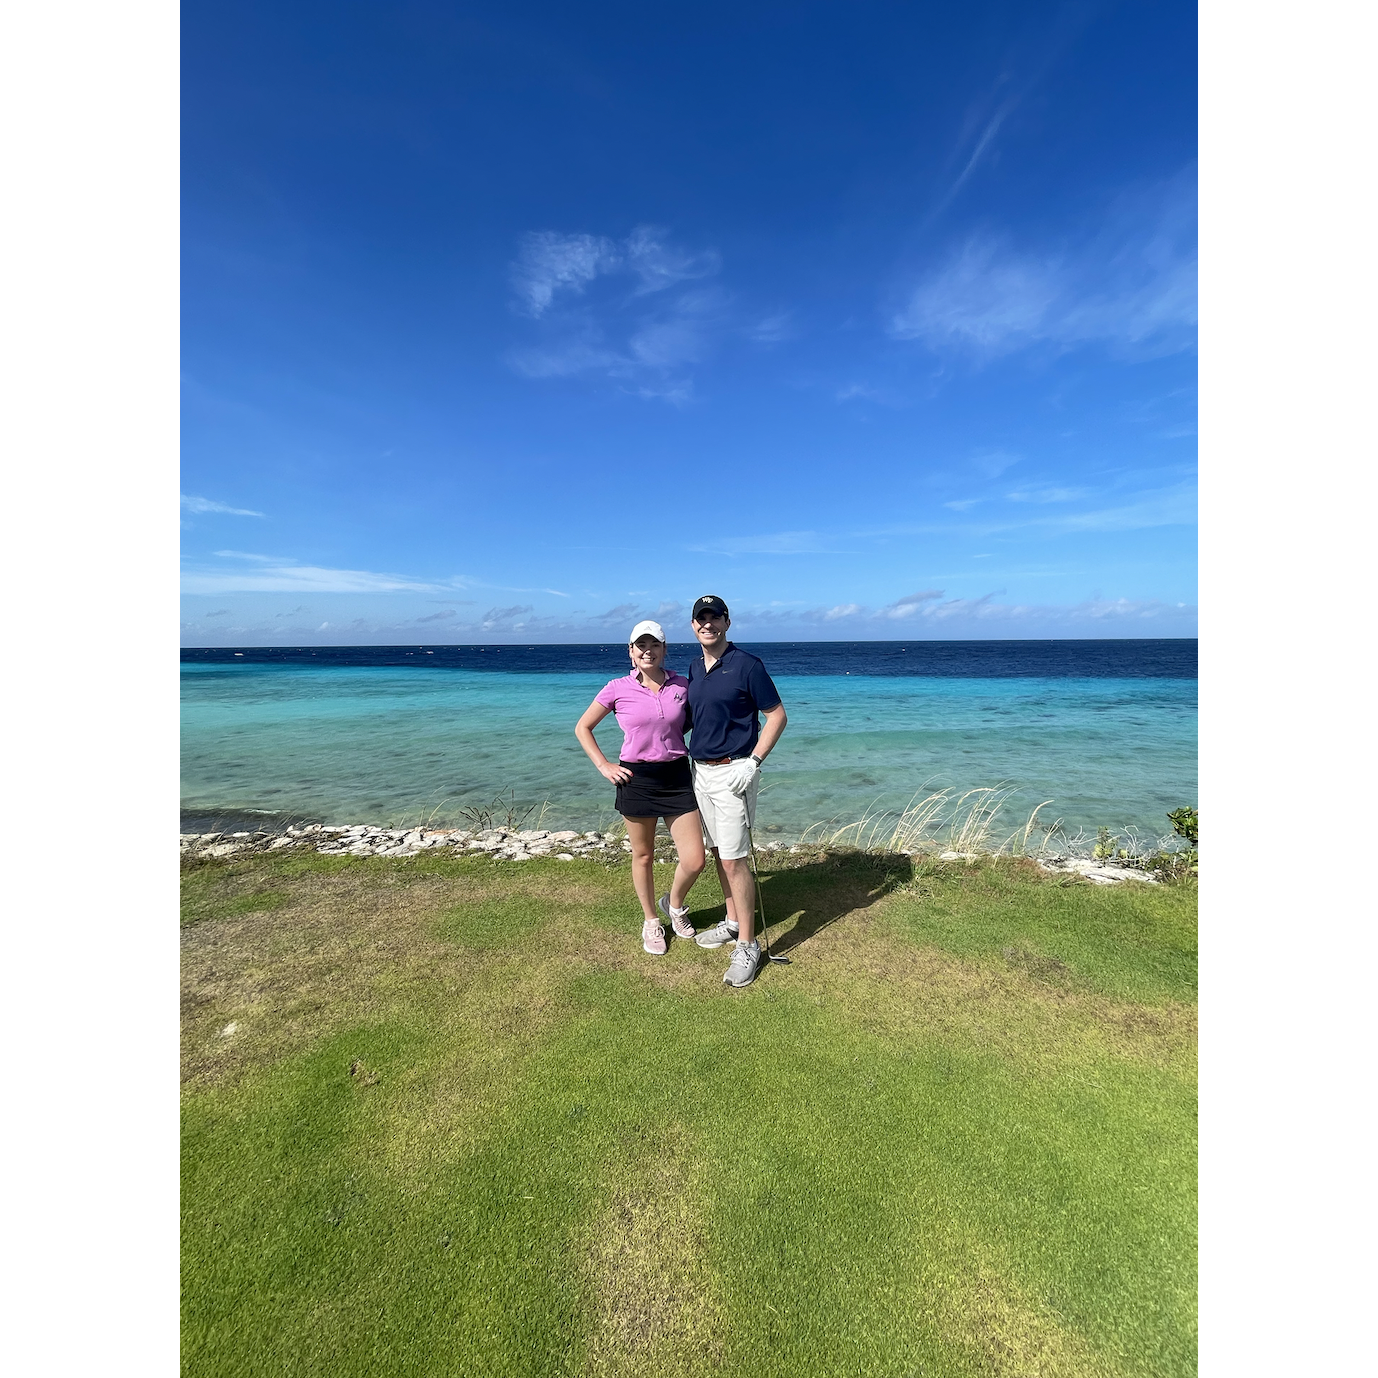 Golf in Curacao!